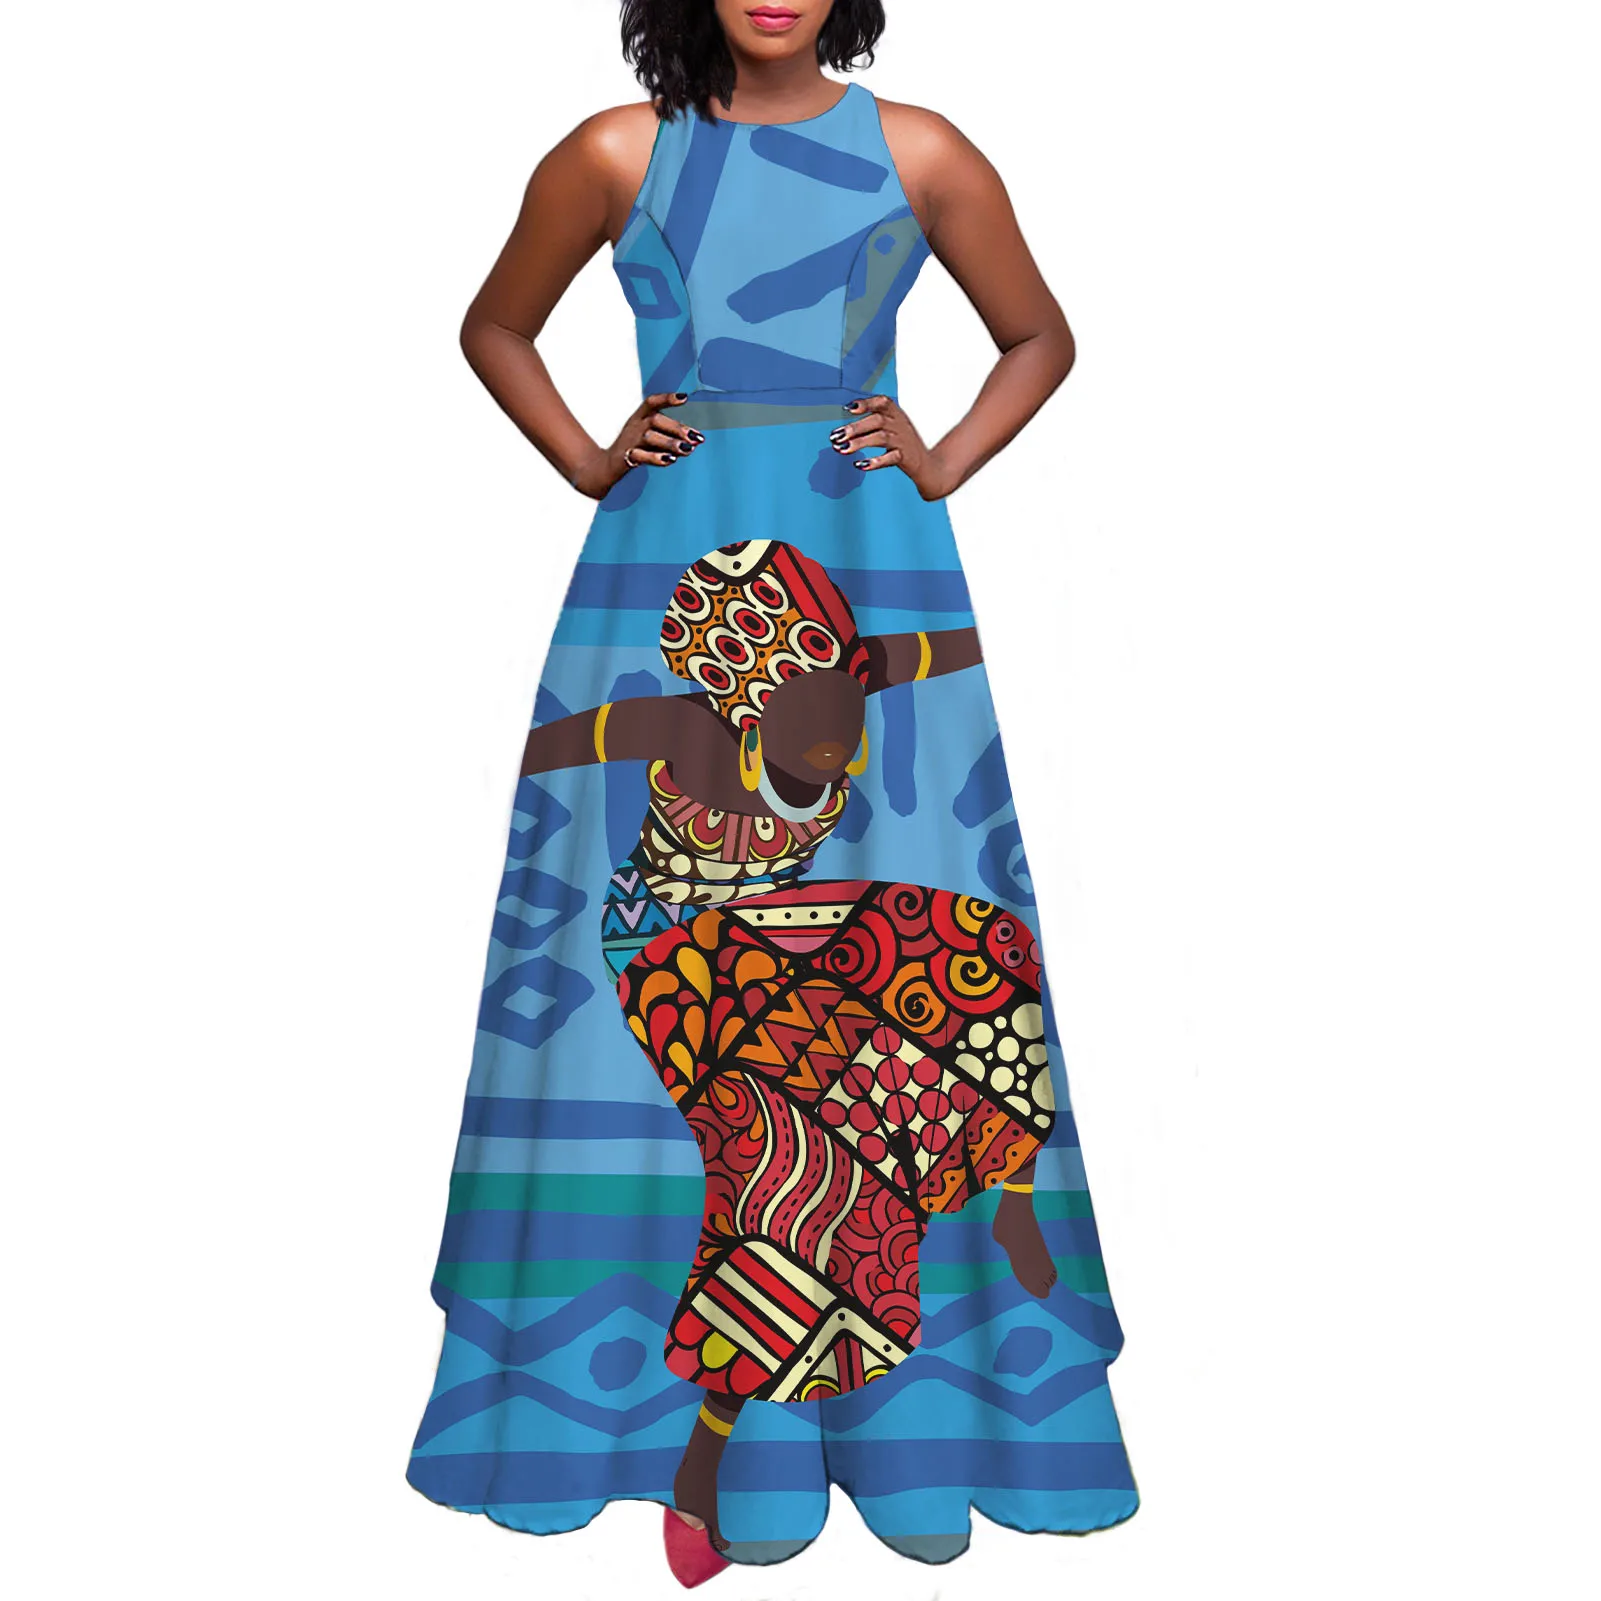 The Best African Kitenge Designs Reny Styles | art-kk.com